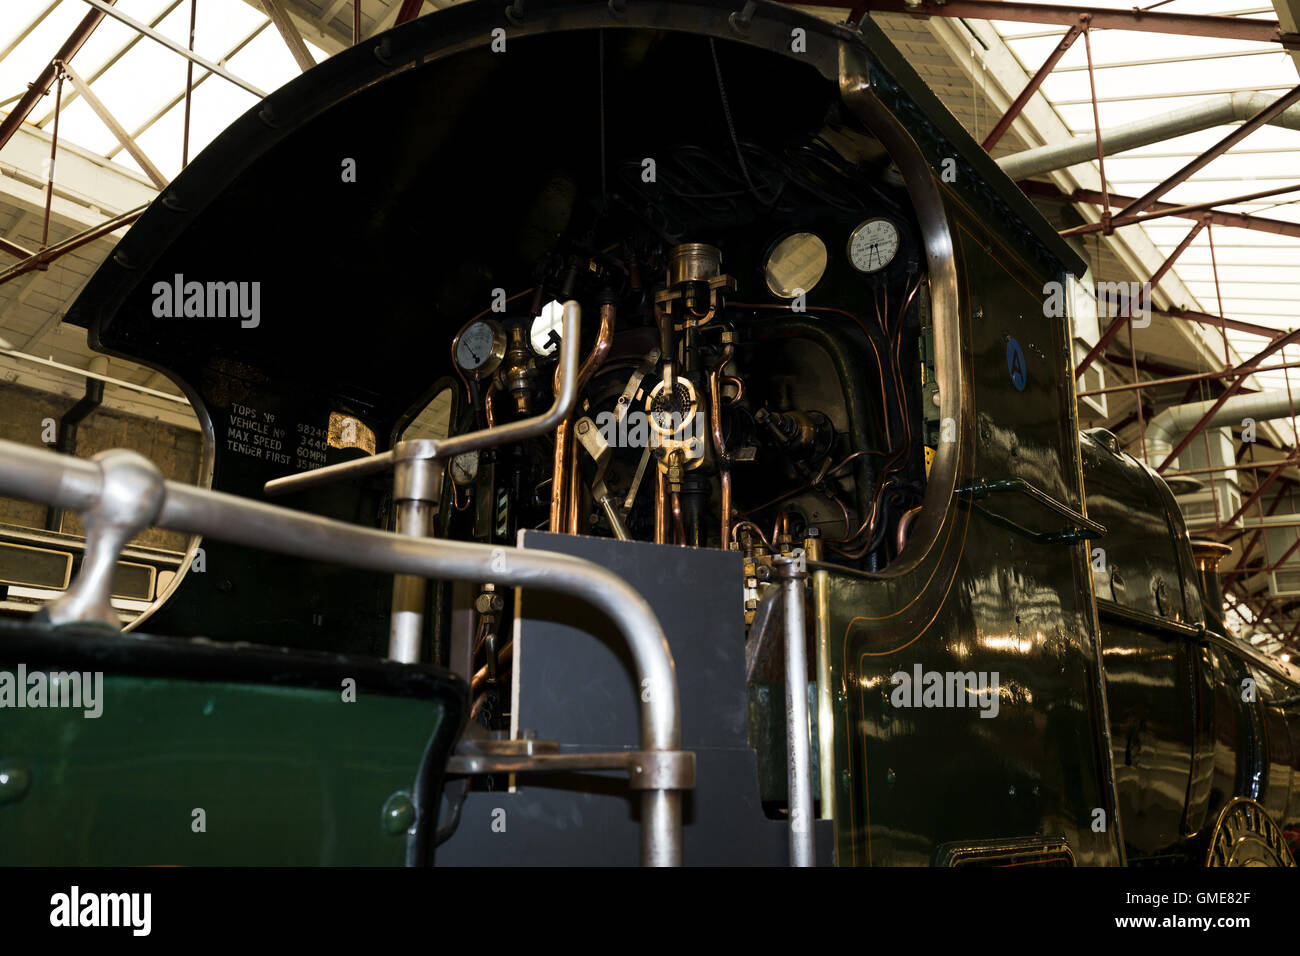 City of Truro locomotive. Swindon Railway Works England UK Stock Photo